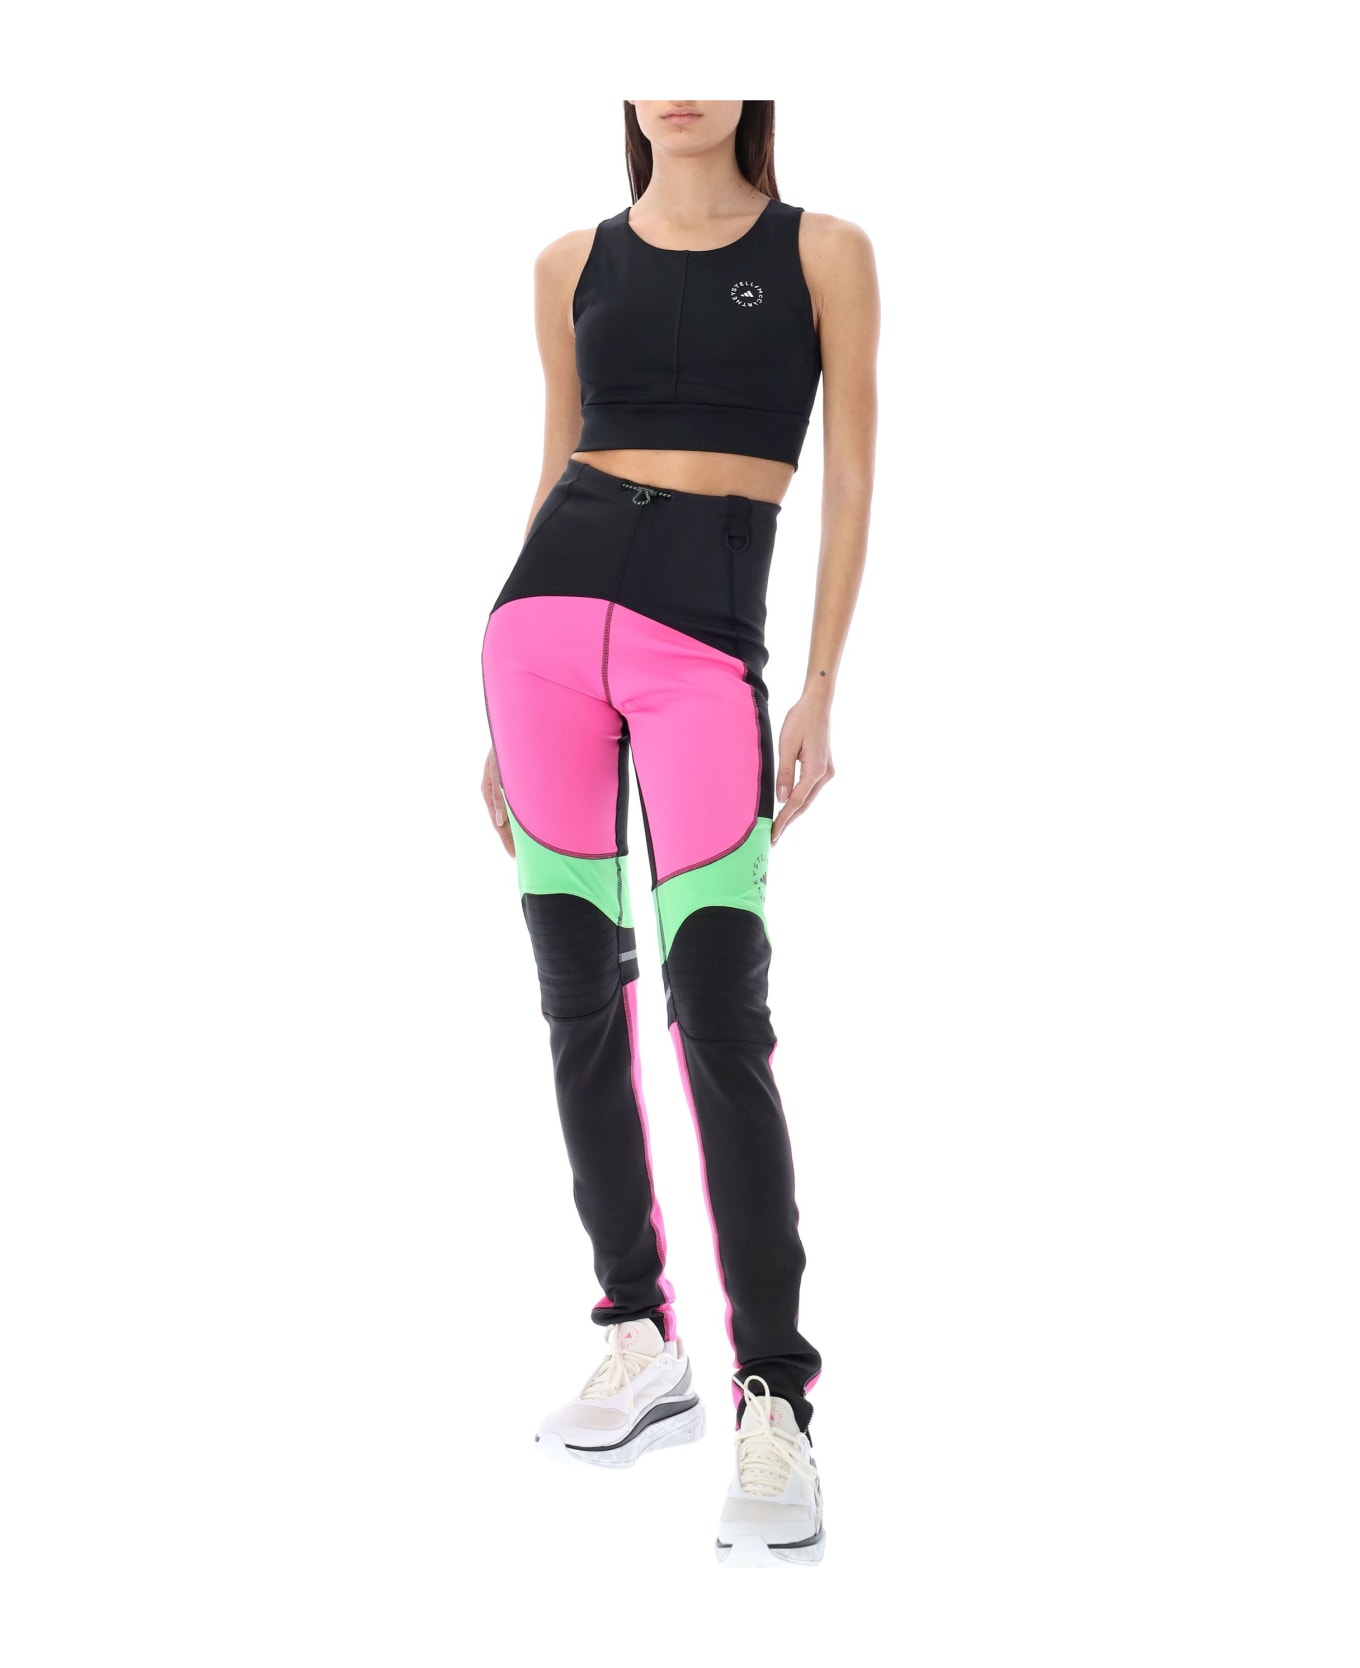 Adidas by Stella McCartney Colorblock Active Leggings - BLACK PINK GREEN レギンス